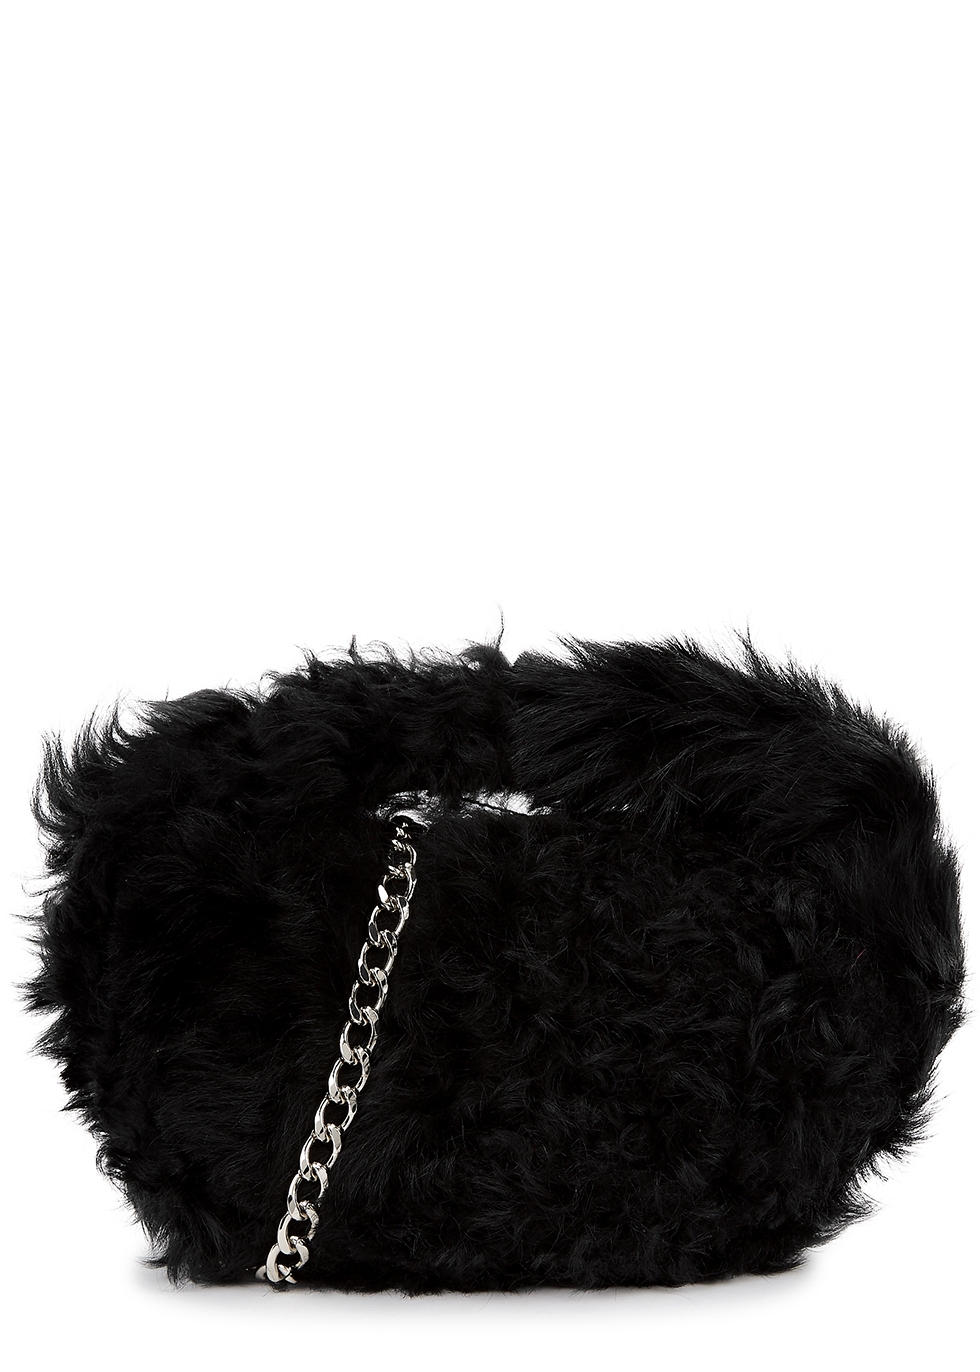 Baby Cush black shearling top handle bag